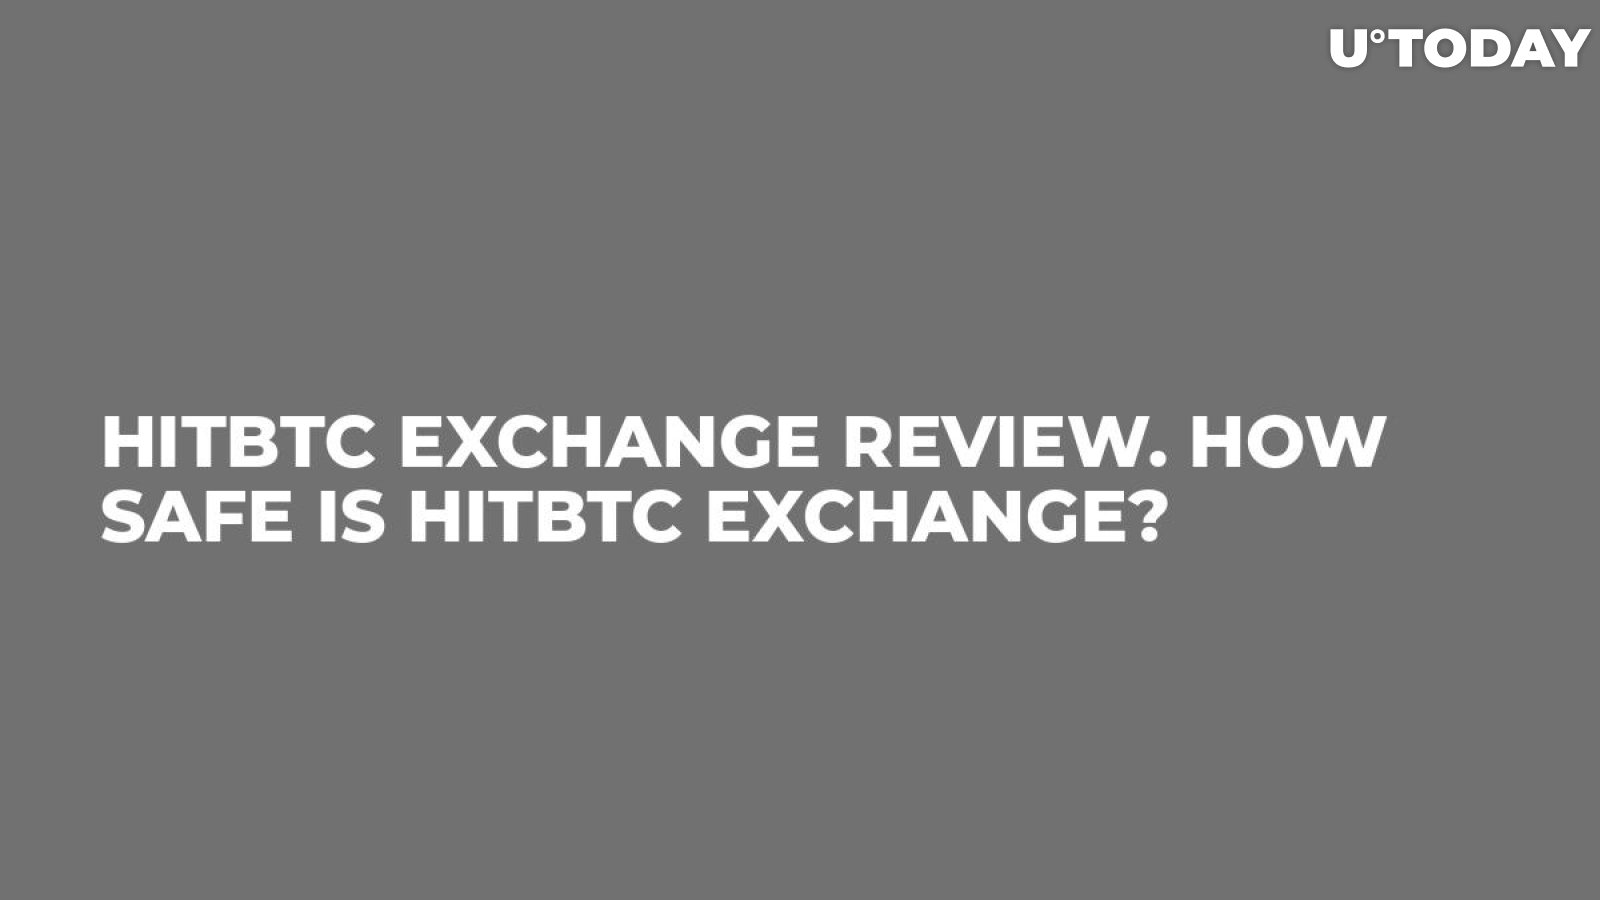 HitBTC Exchange Review. How Safe Is HitBTC Exchange?